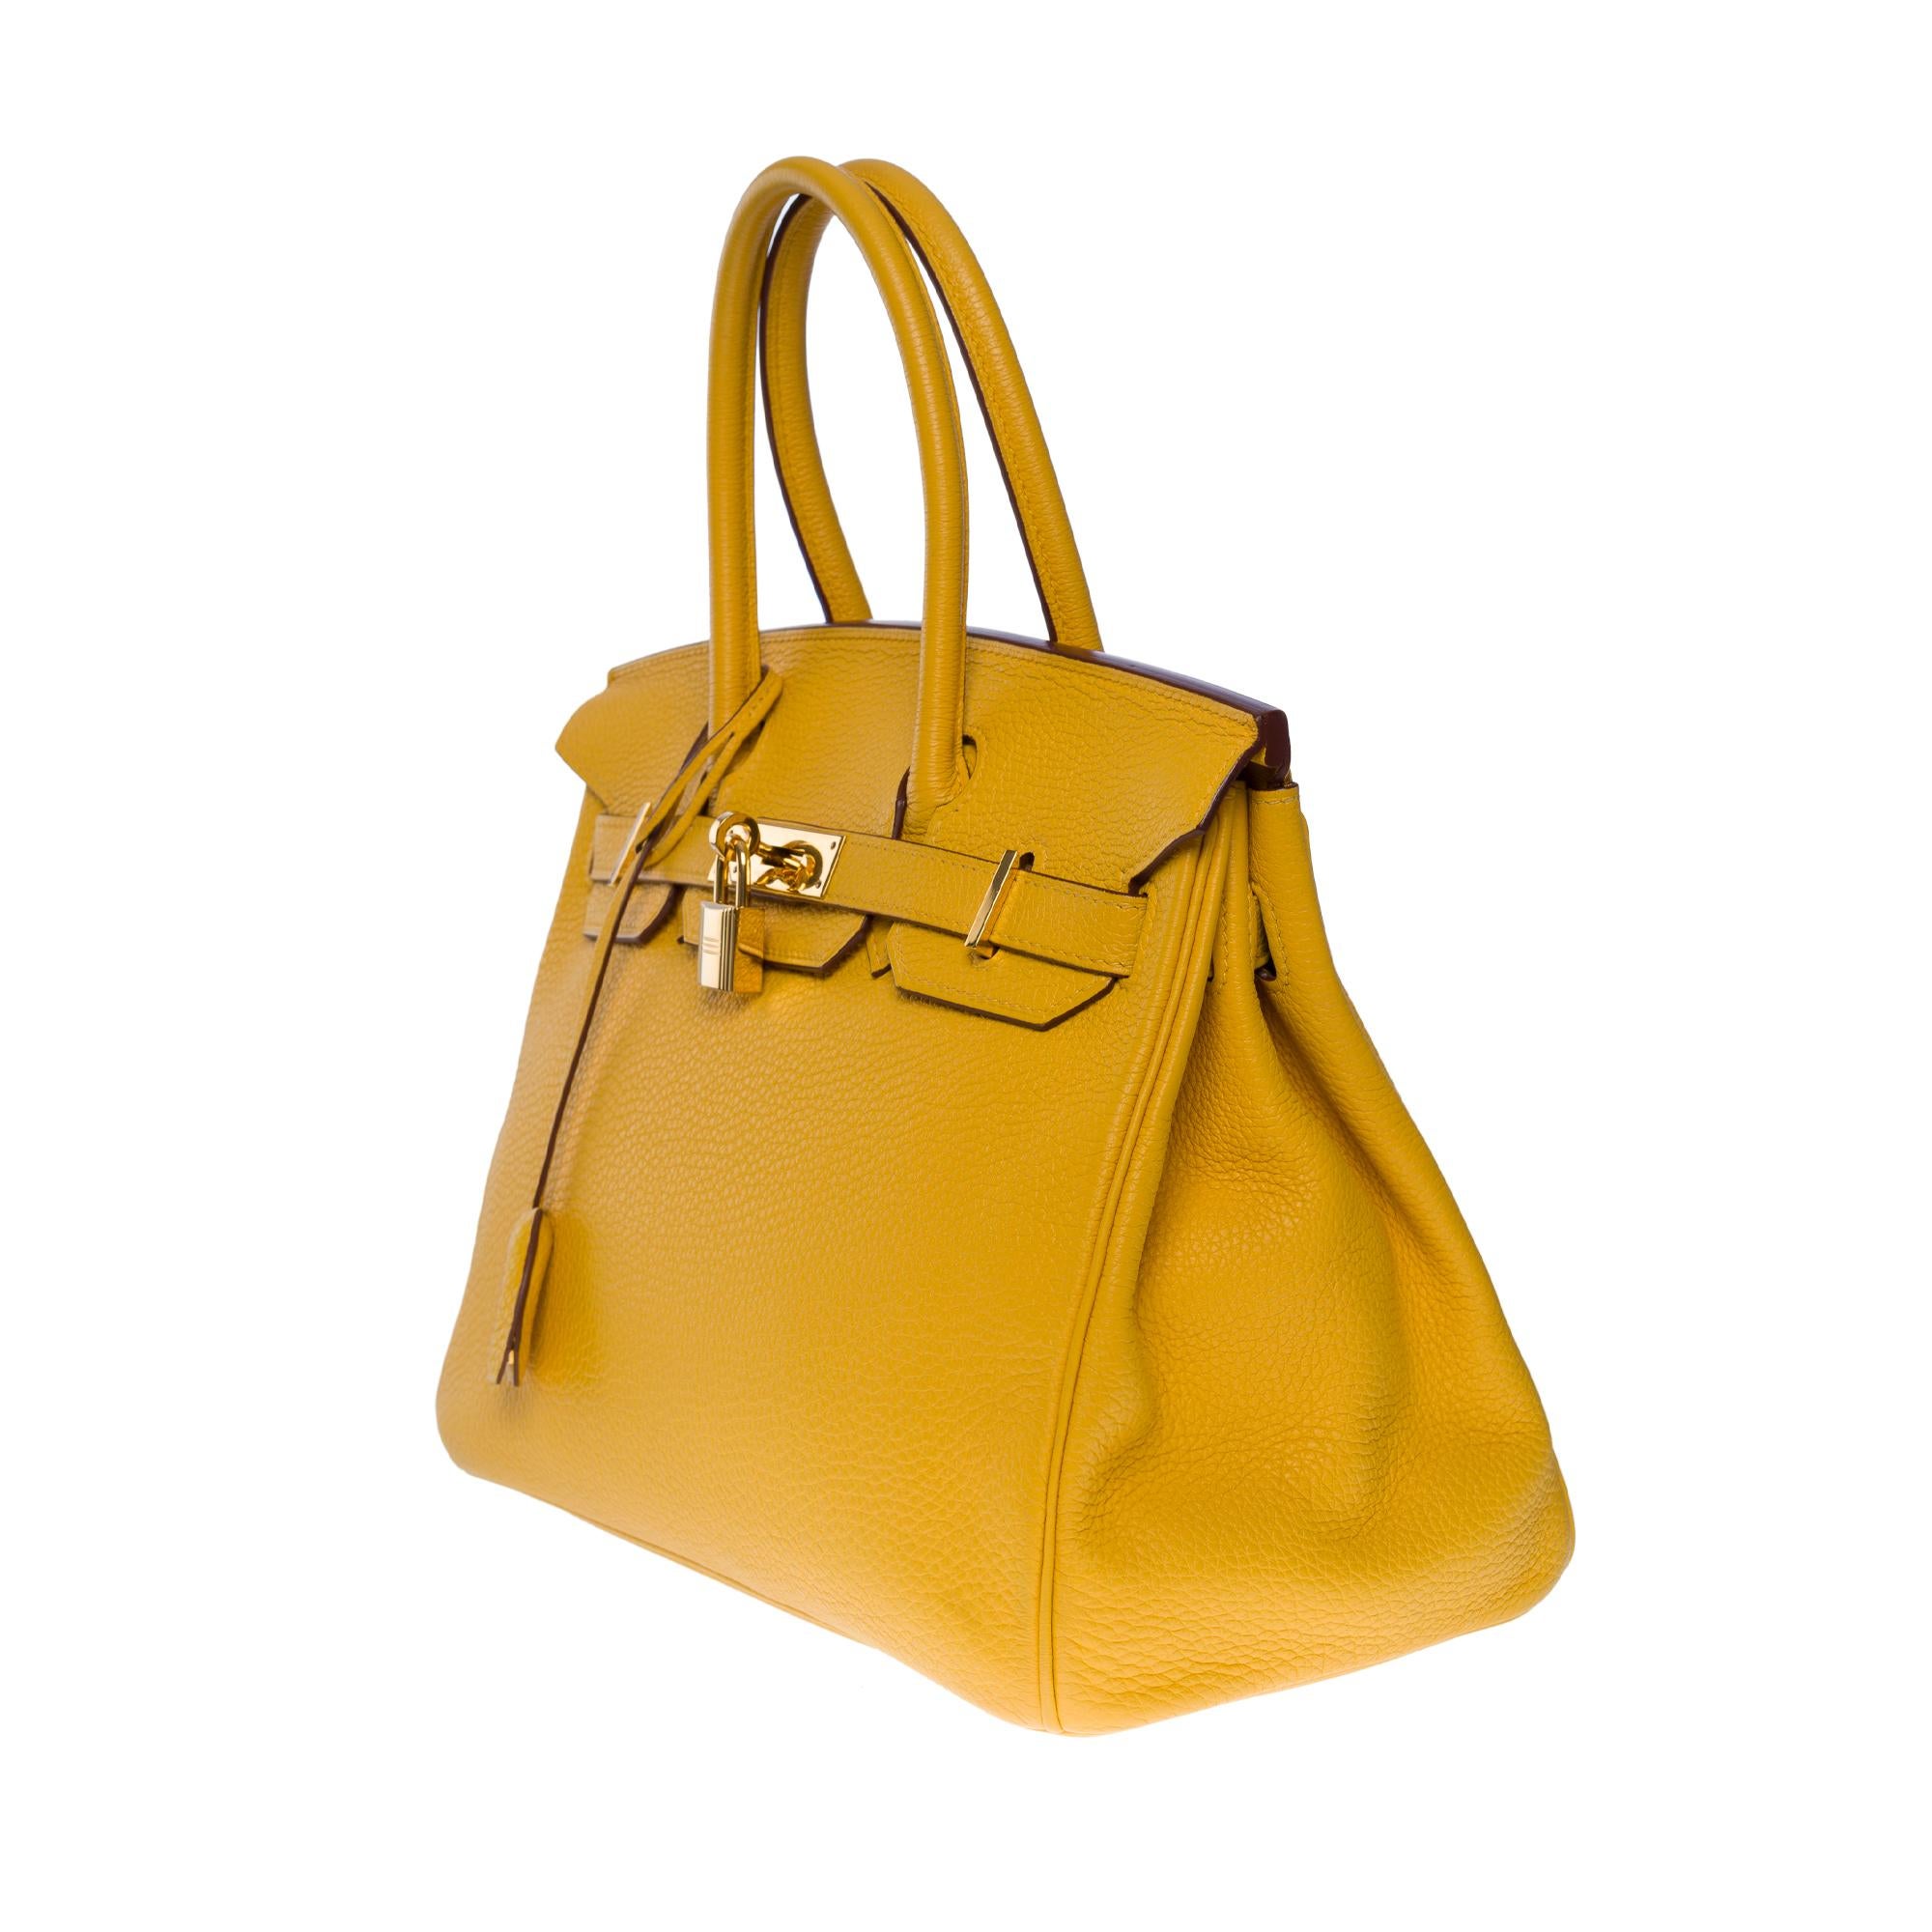 Women's Amazing & Bright Hermès Birkin 30 handbag in Yellow Togo leather, GHW For Sale